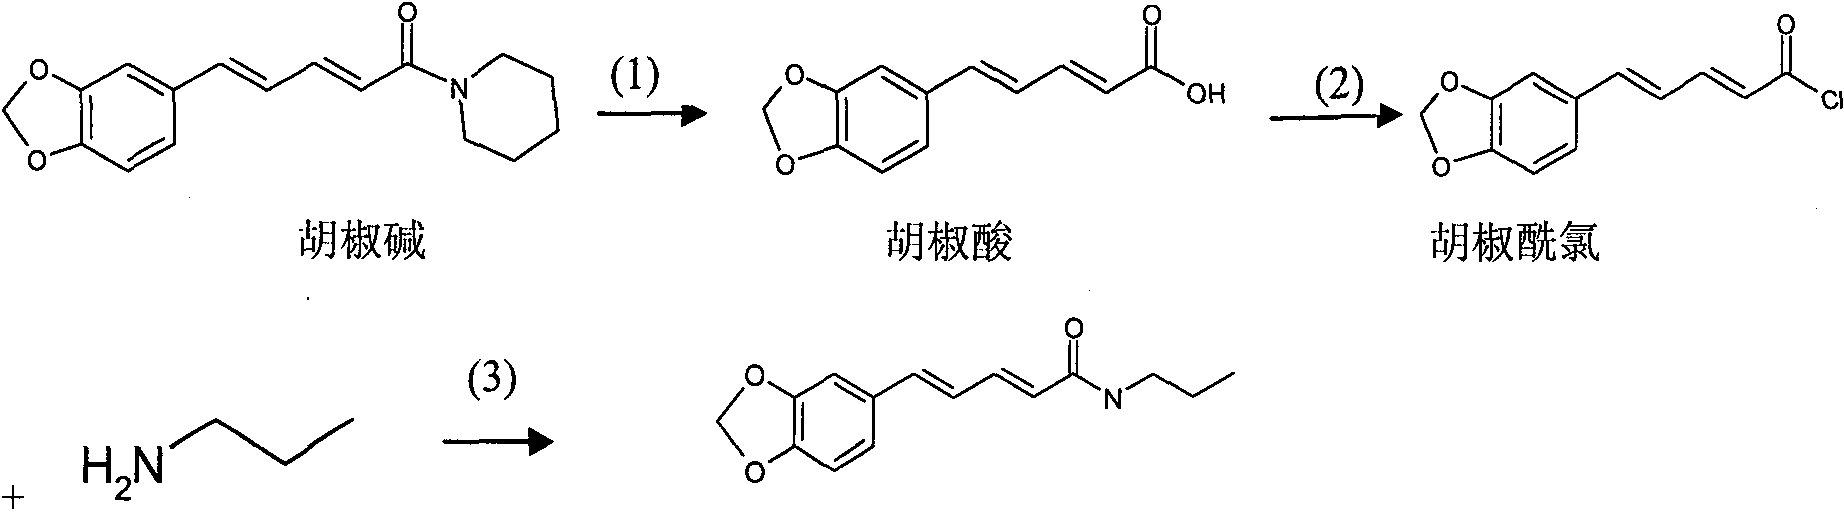 Applications of 5-(3,4-methylenedioxy phenyl)-2E,4E pentadienoic acid propylamine amide in preparation of neurological disease treatment products